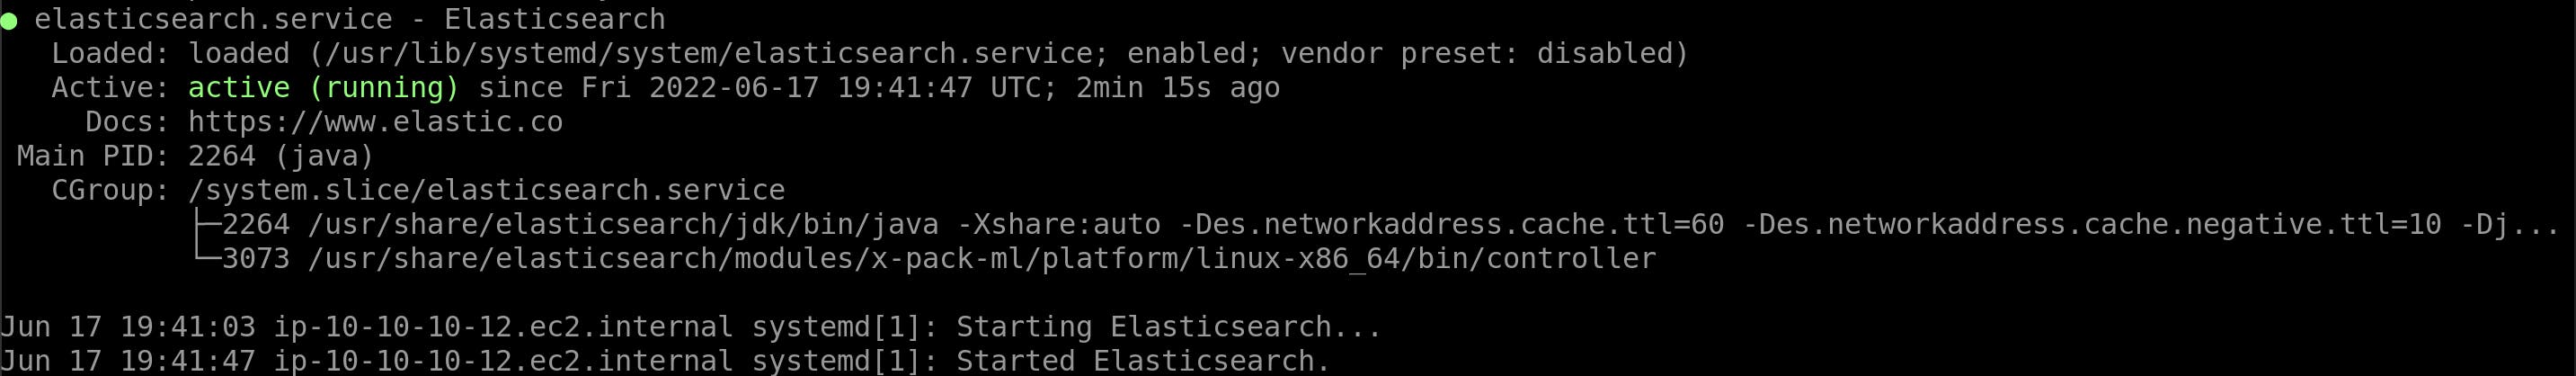 Elasticsearch service running